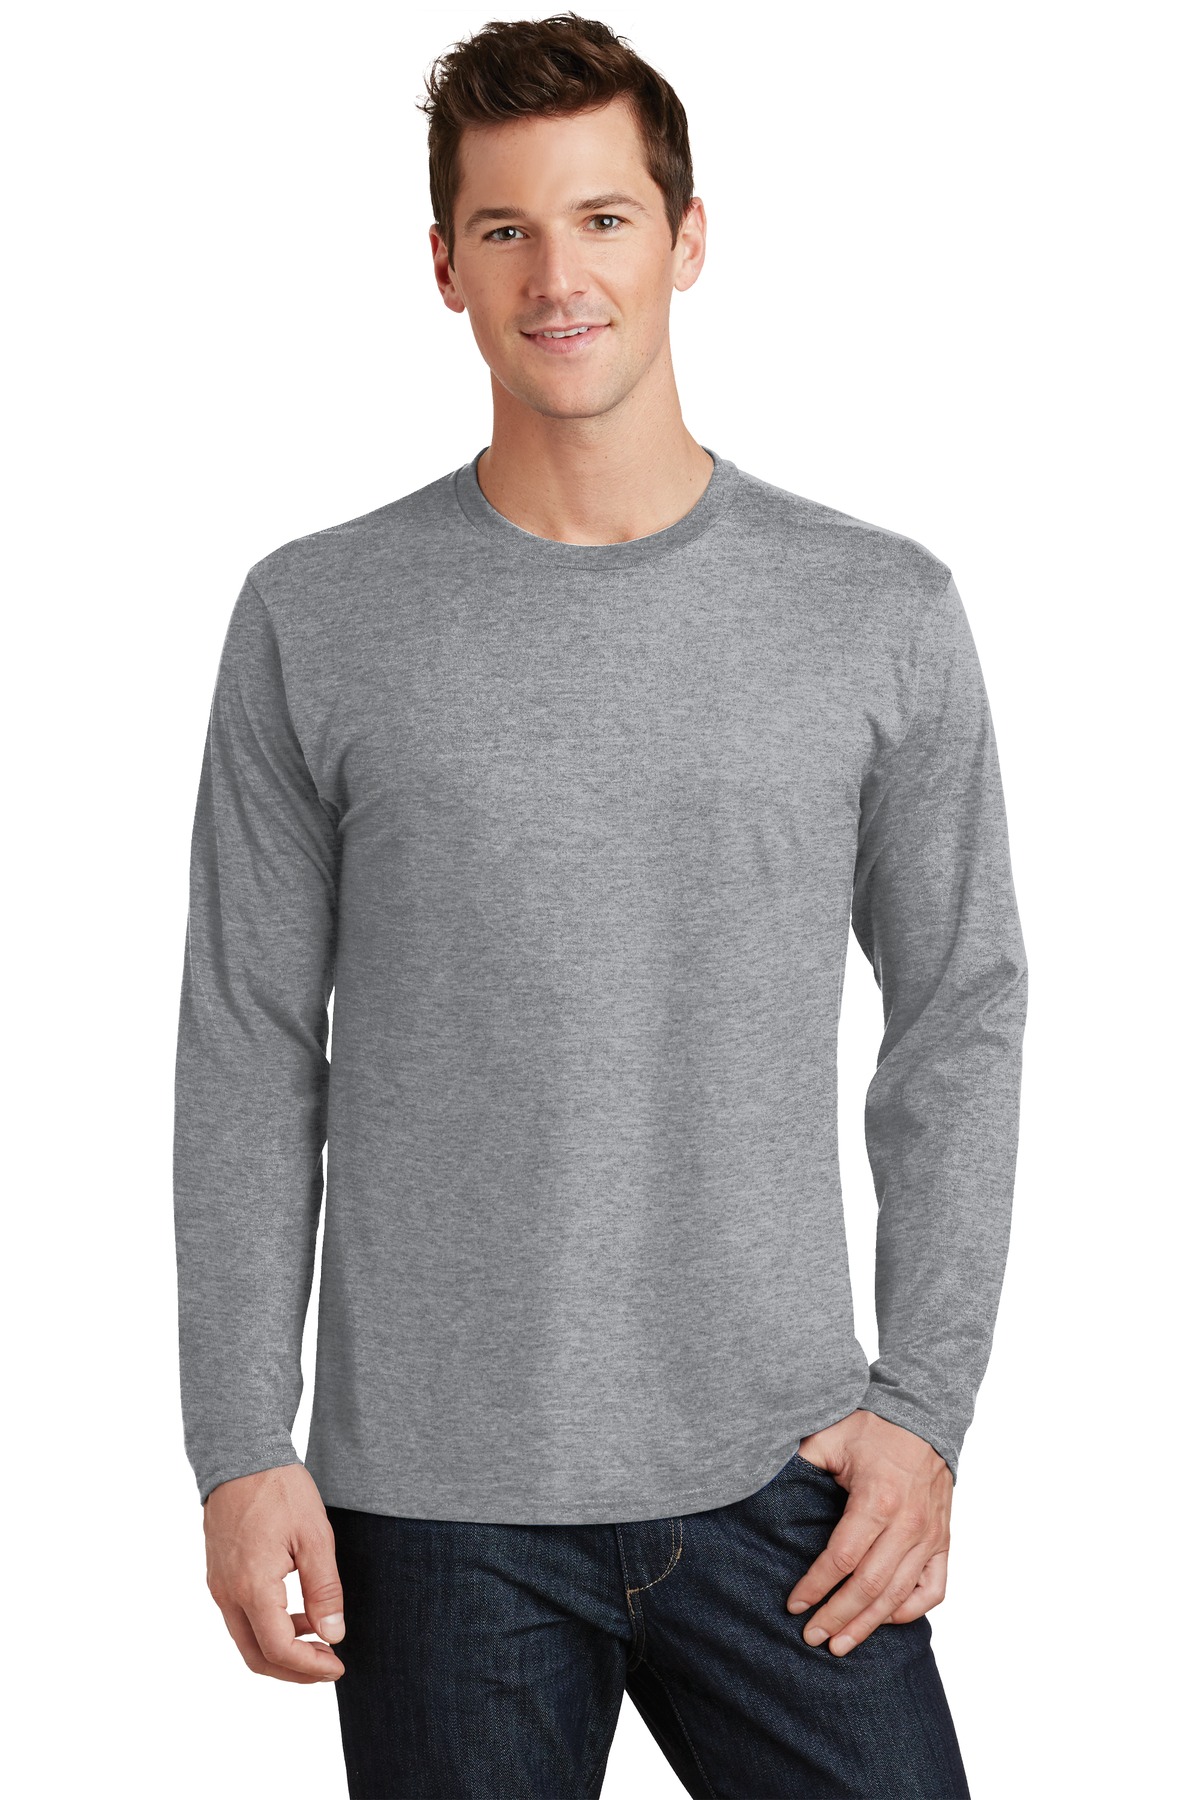 Port & Company Long Sleeve Fan Favorite T-Shirt - PC450LS